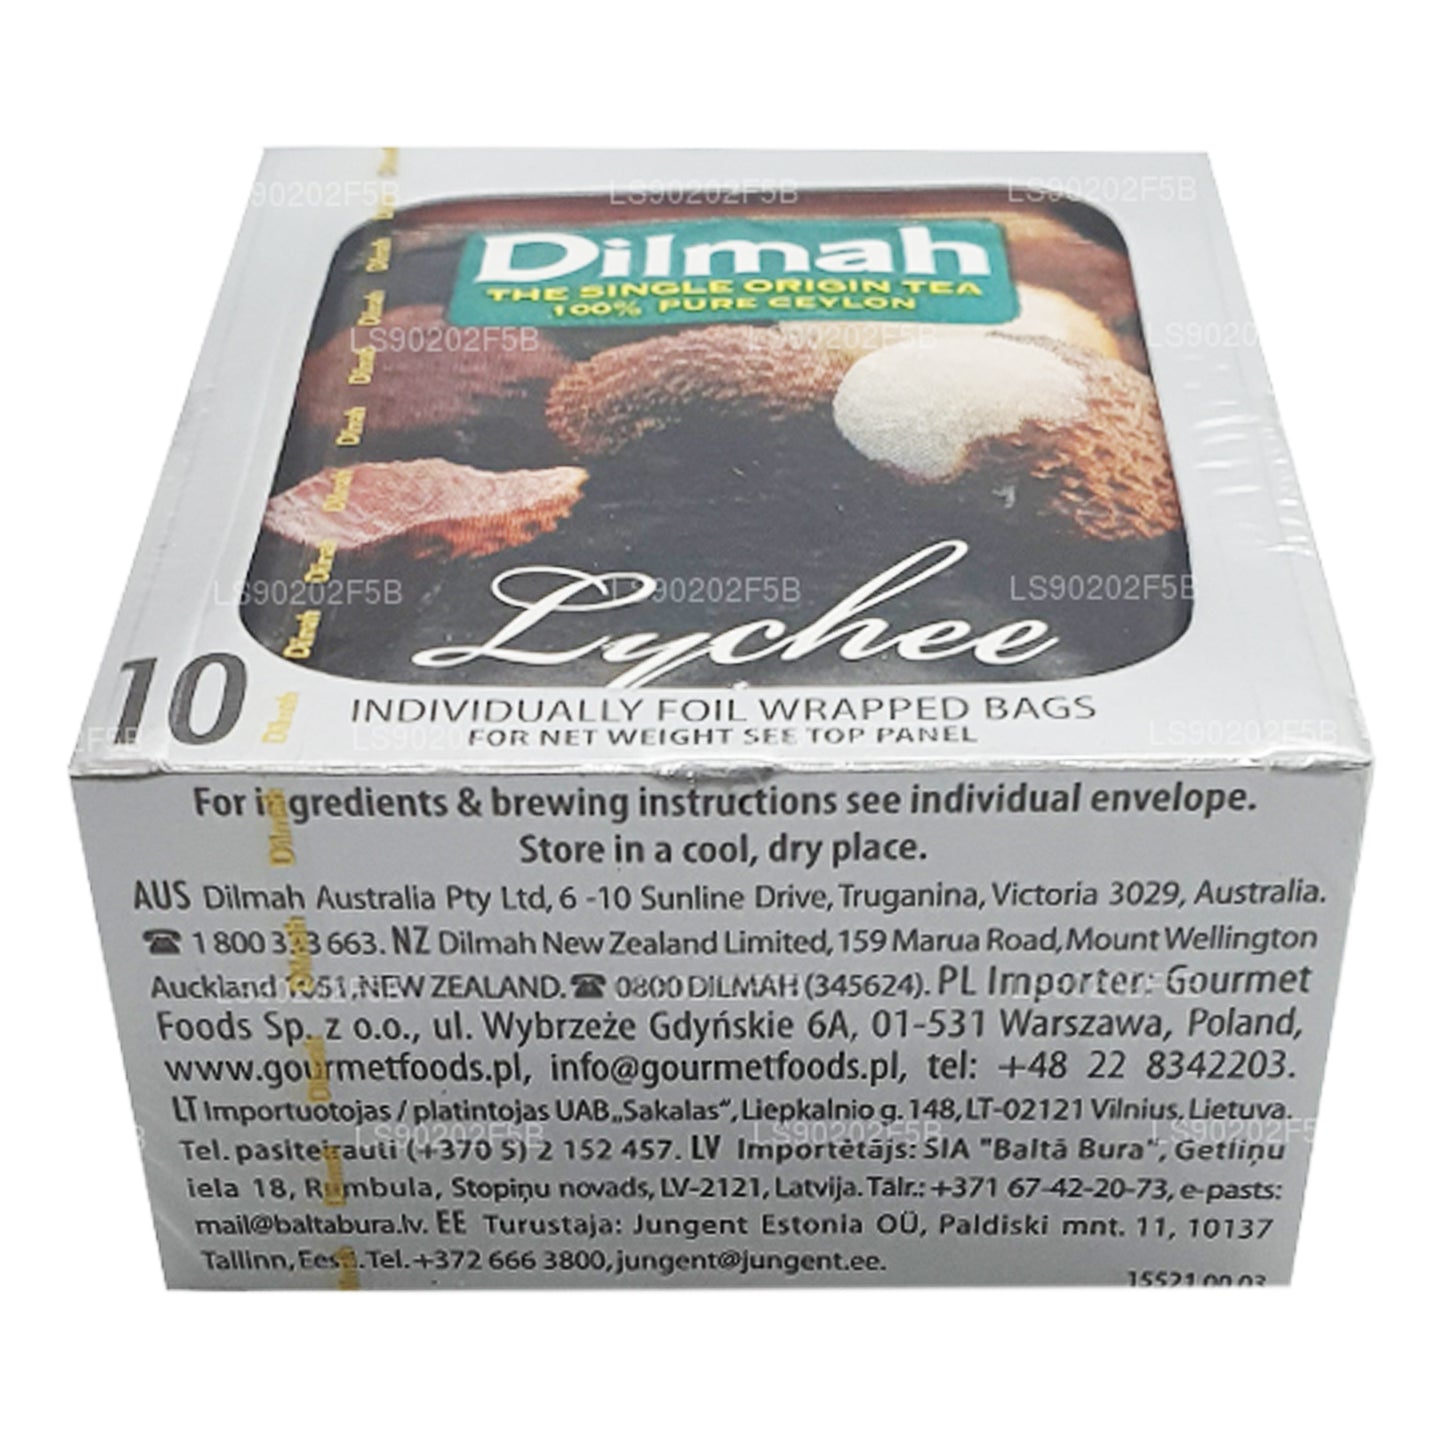 Dilmah Lychee aromatiseret Ceylon sort te (20g) 10 teposer